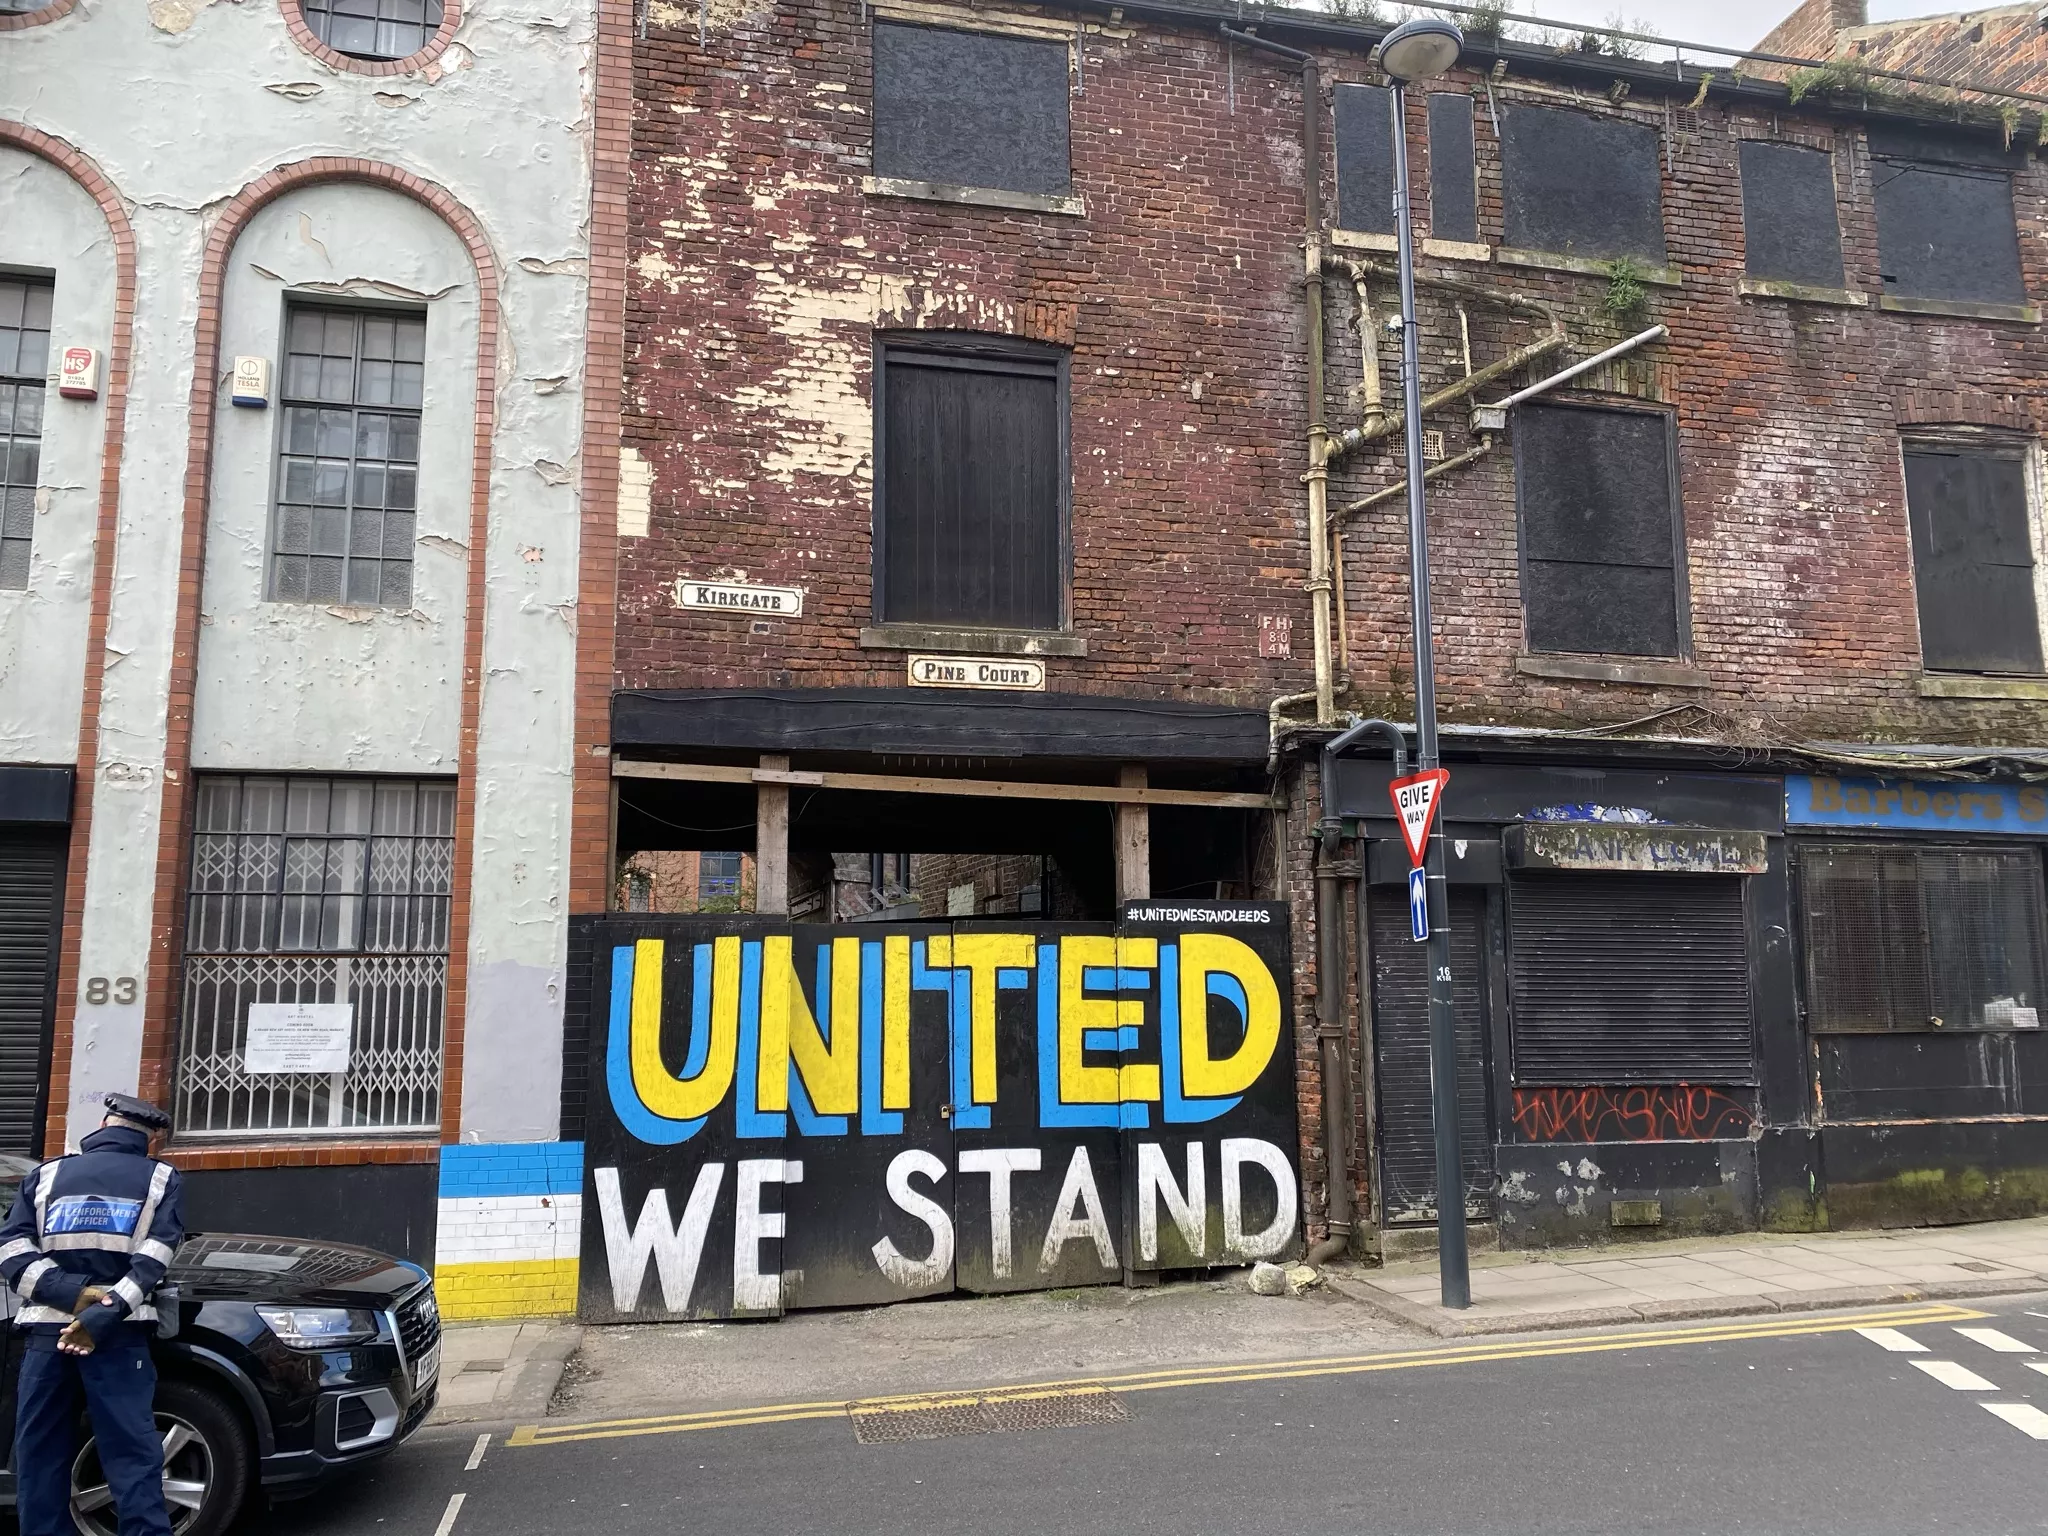 Leeds United We Stand